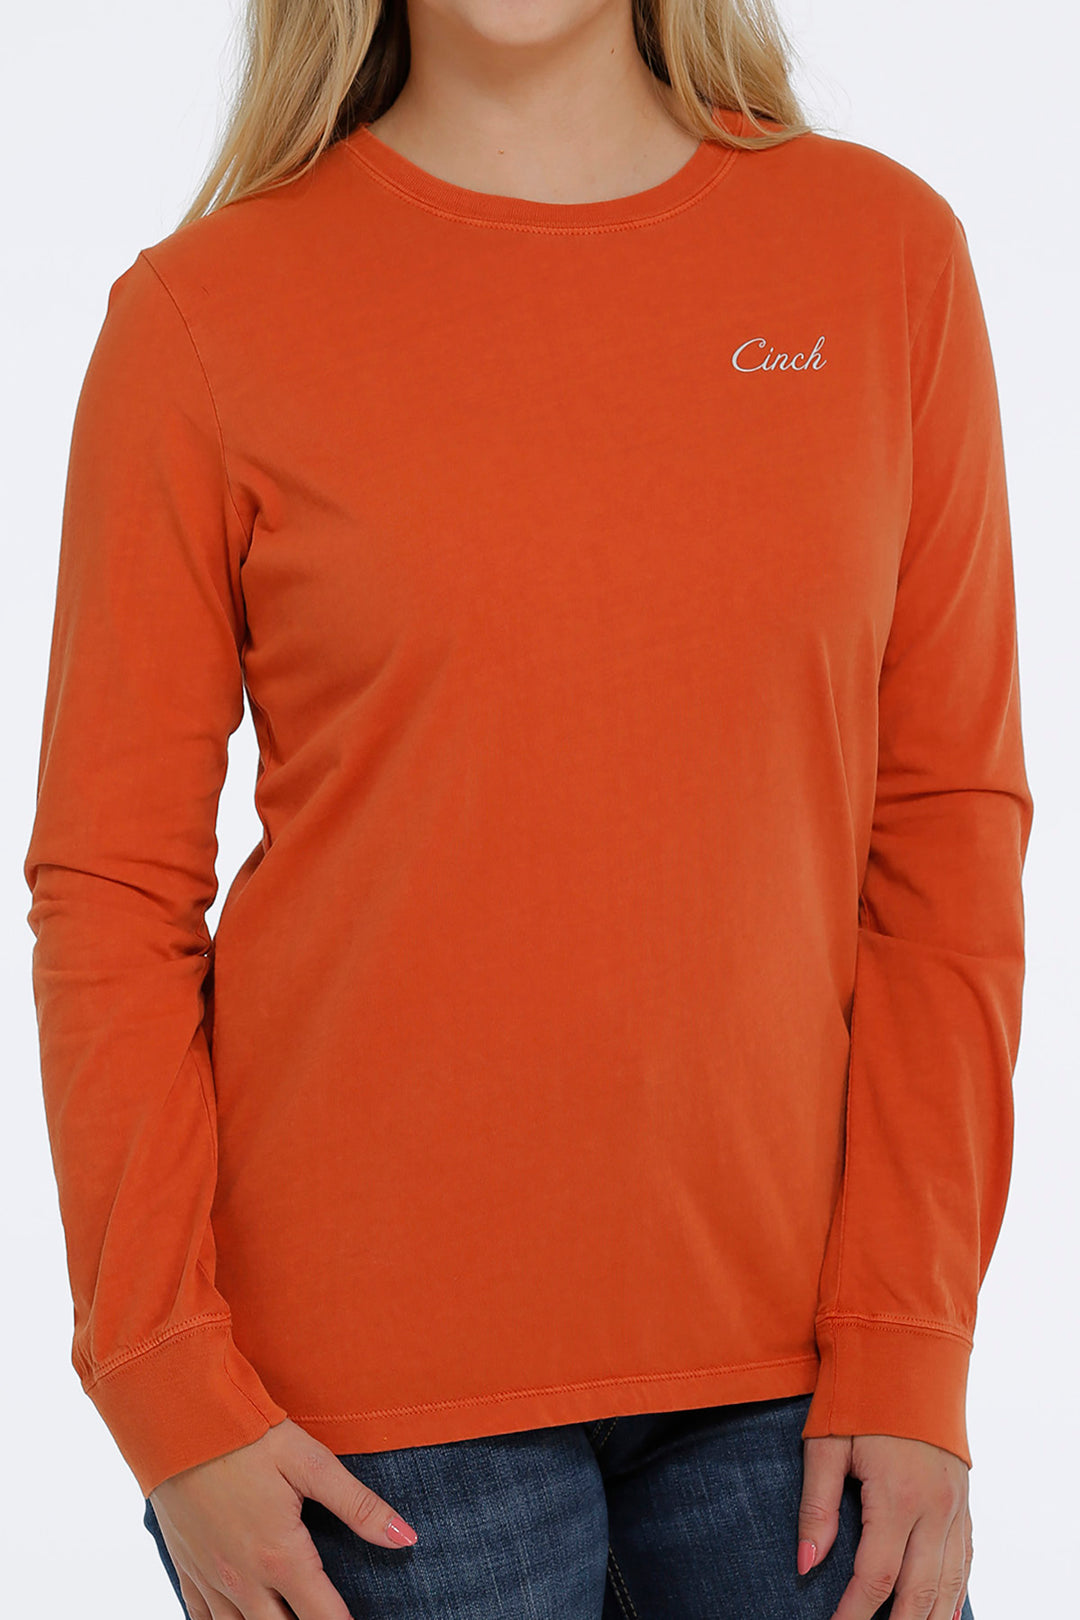 Cinch Women's Copper Orange Graphic Logo Shirt